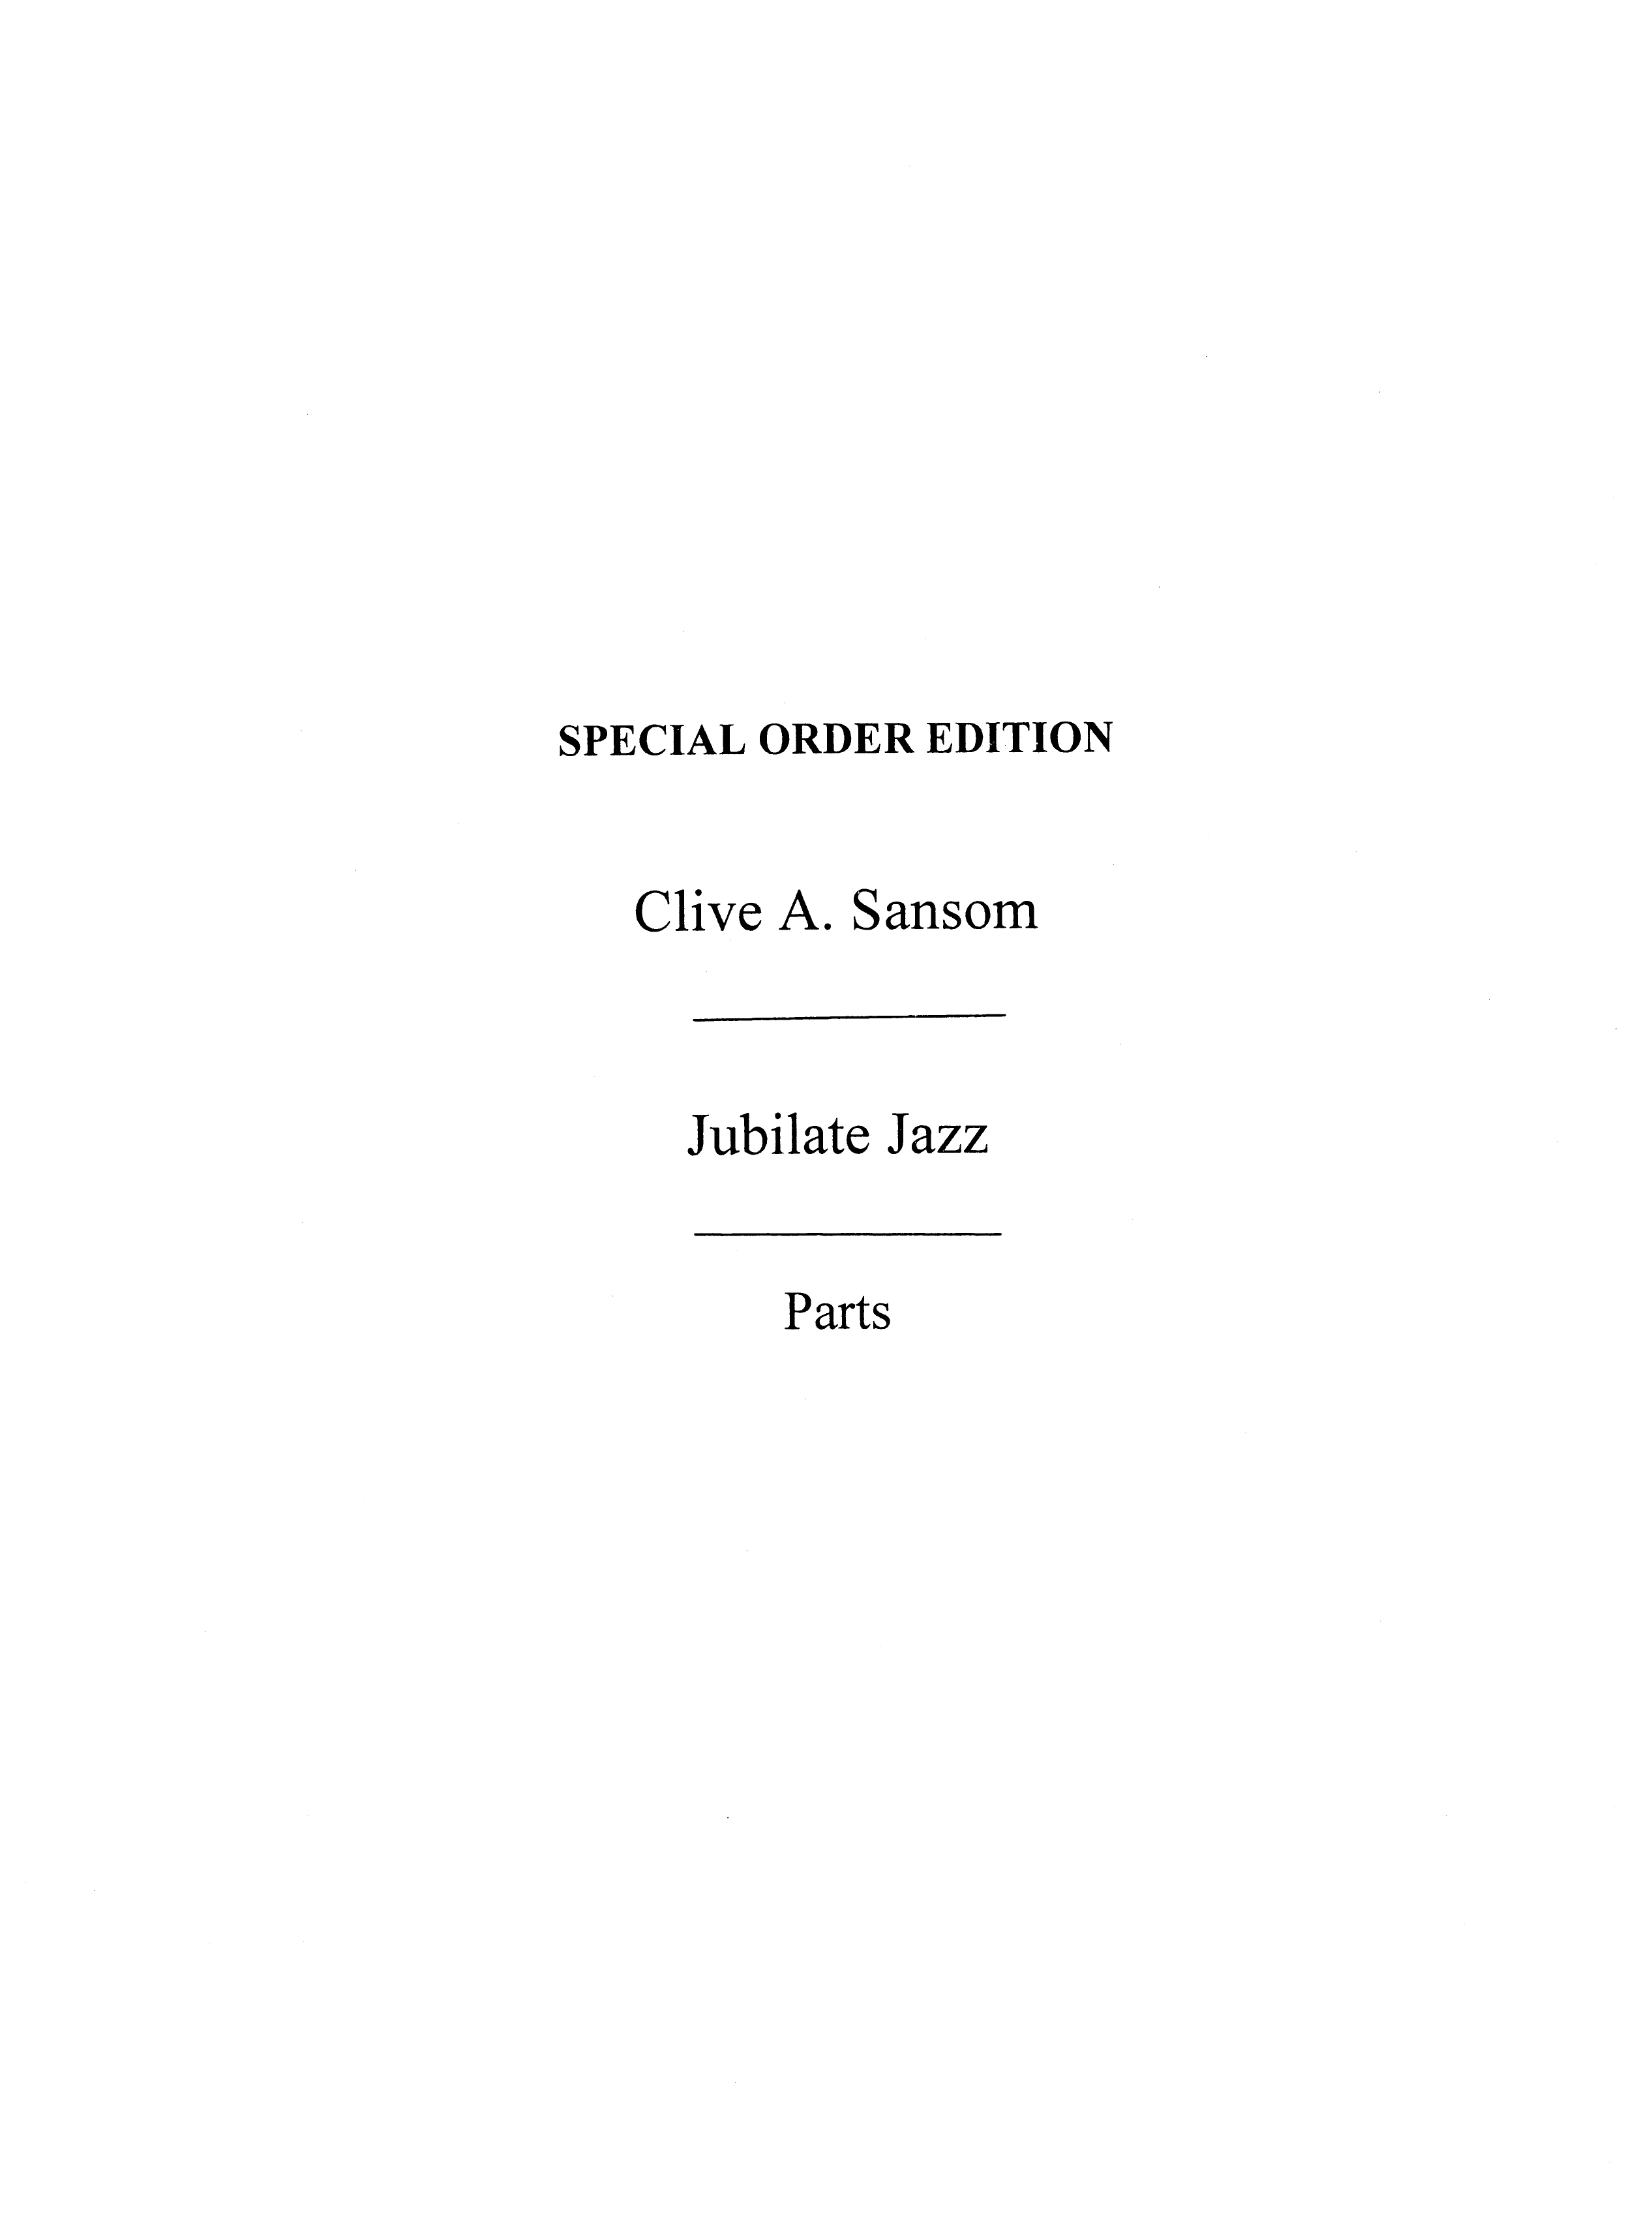 Clive Sansom: Jubilate Jazz Instrumental: Jazz Ensemble: Parts